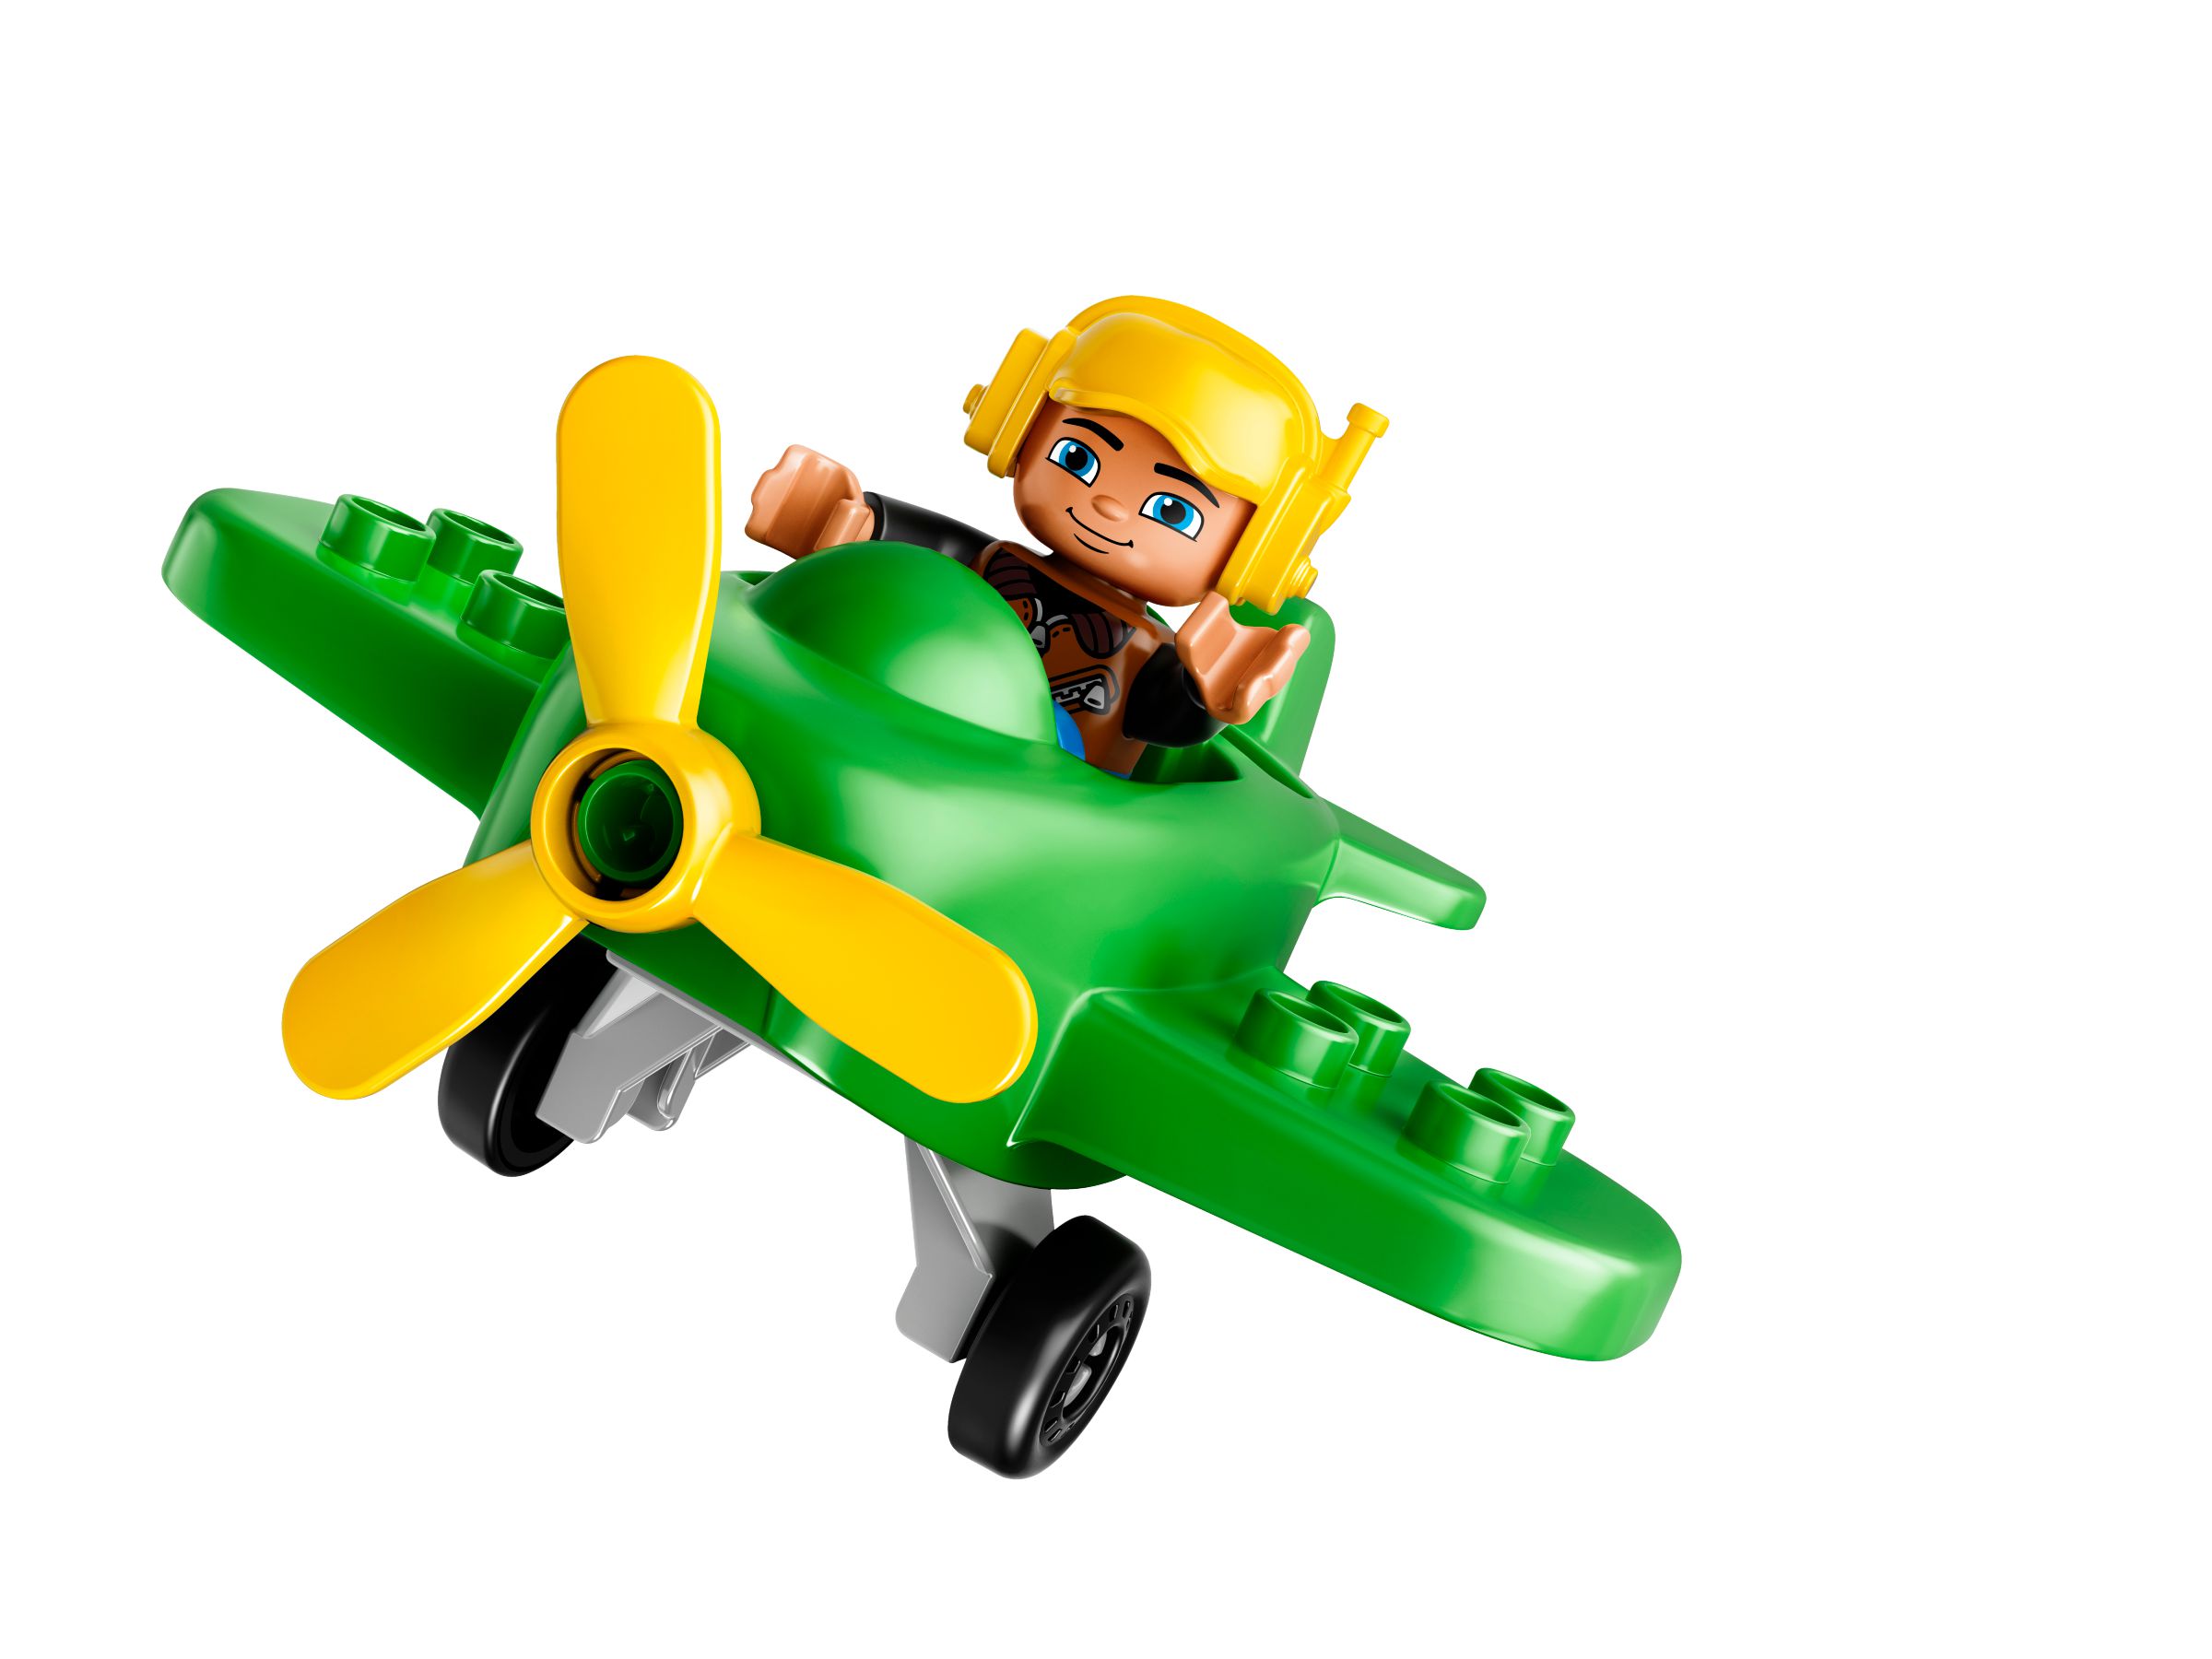 LEGO Duplo 10808 Kleines Flugzeug LEGO_10808_alt3.jpg